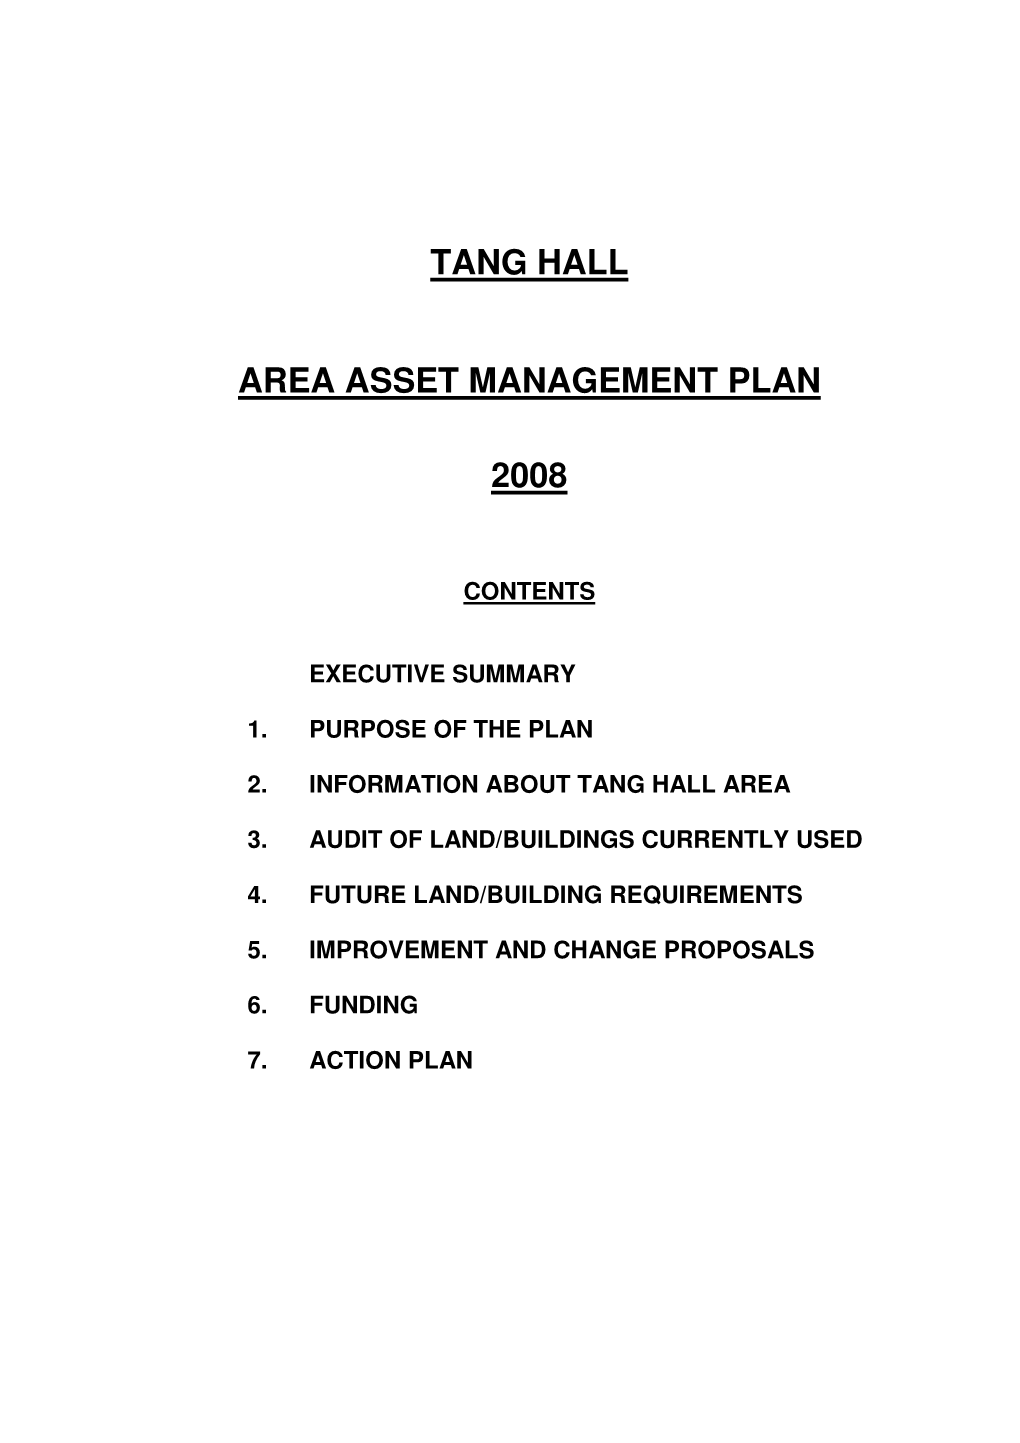 Tang Hall Area Asset Management Plan 2008